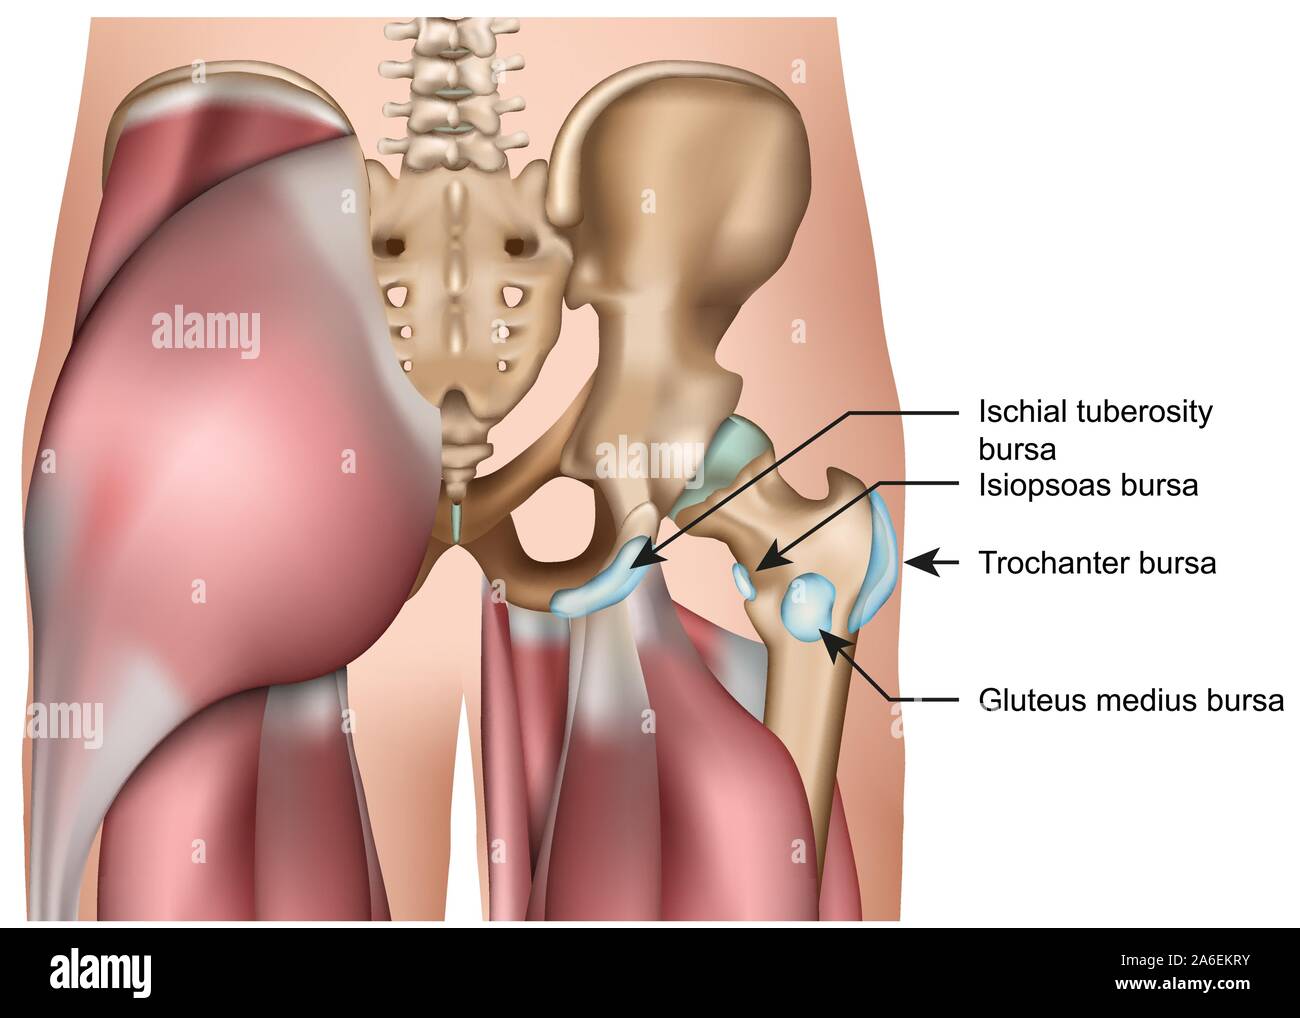 hip bursa anatomy 3d medical vector illustration isolated on white background Stock Vector